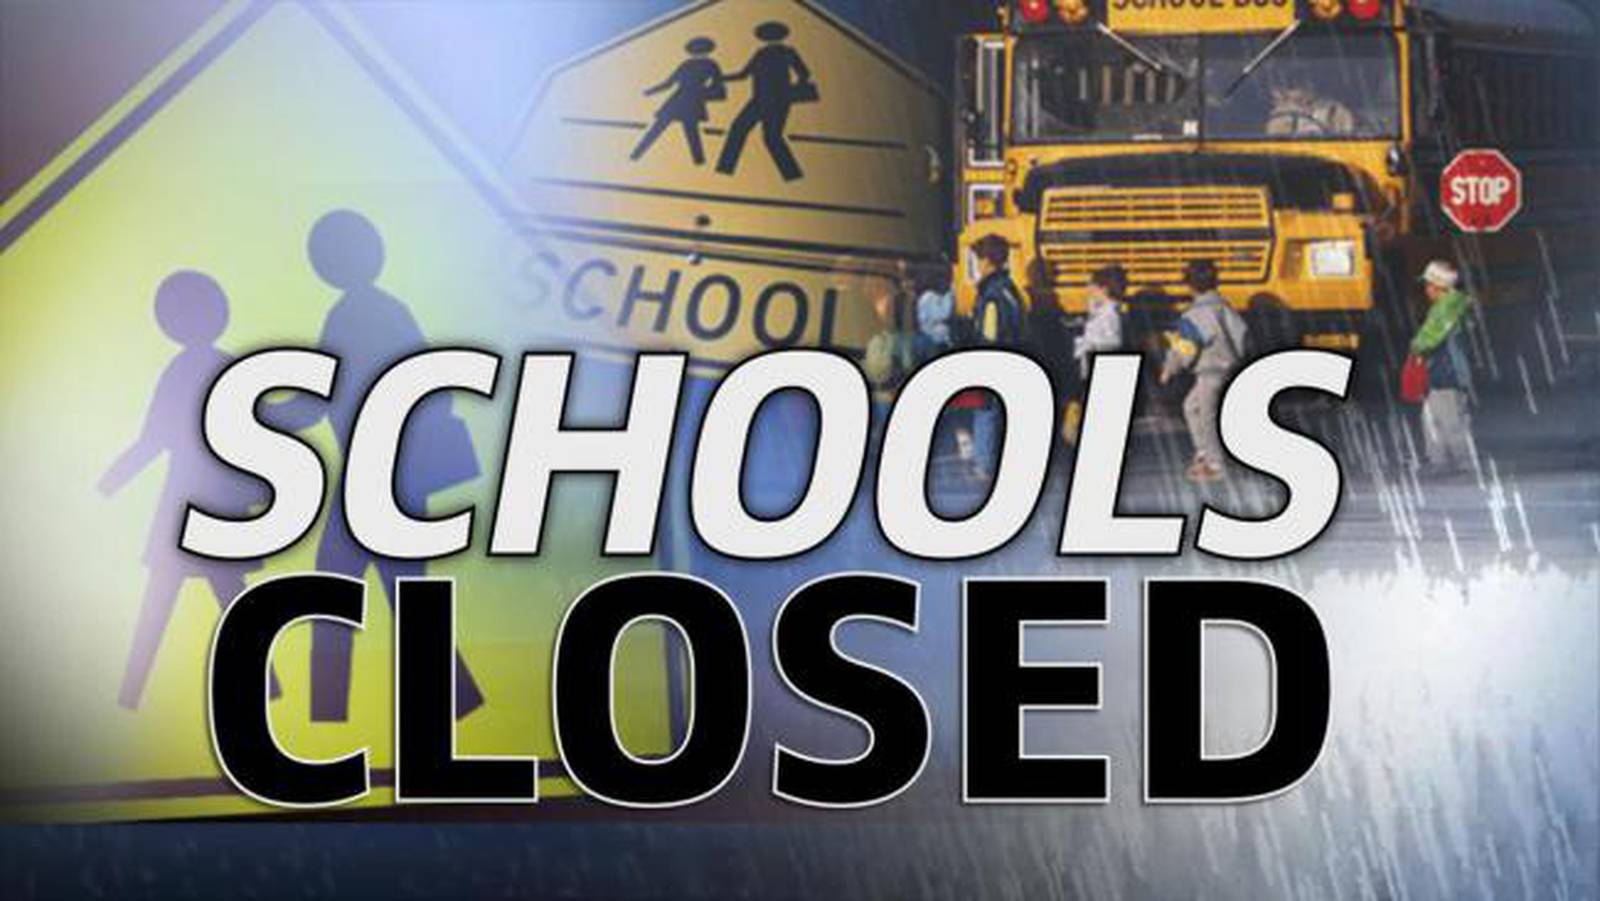 MiamiDade Public Schools to close Thursday and Friday Easy 93.1